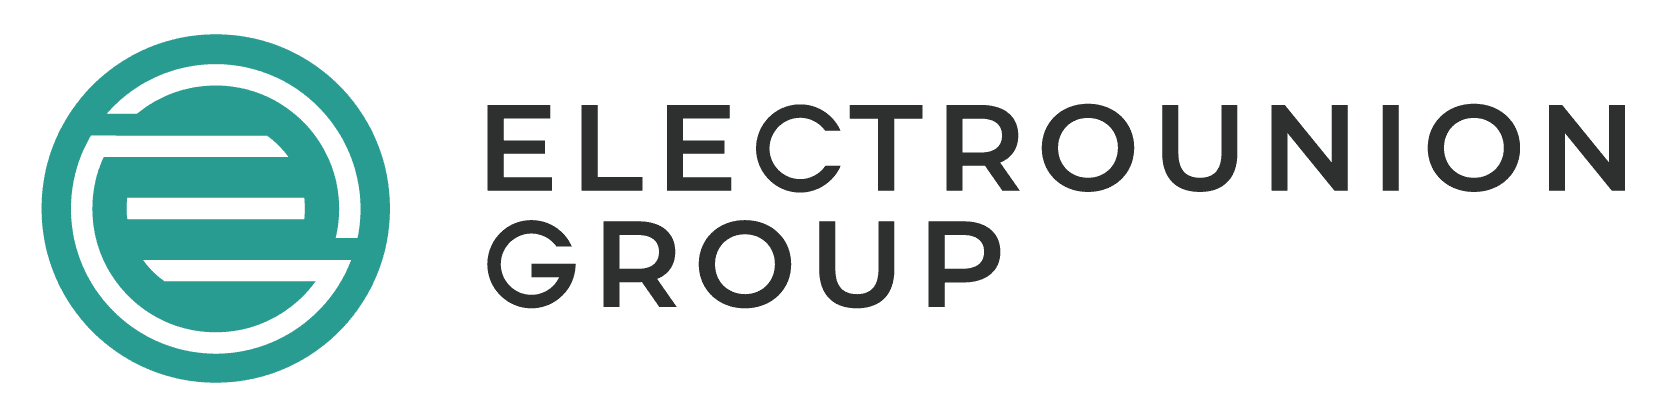 Electrounion Group